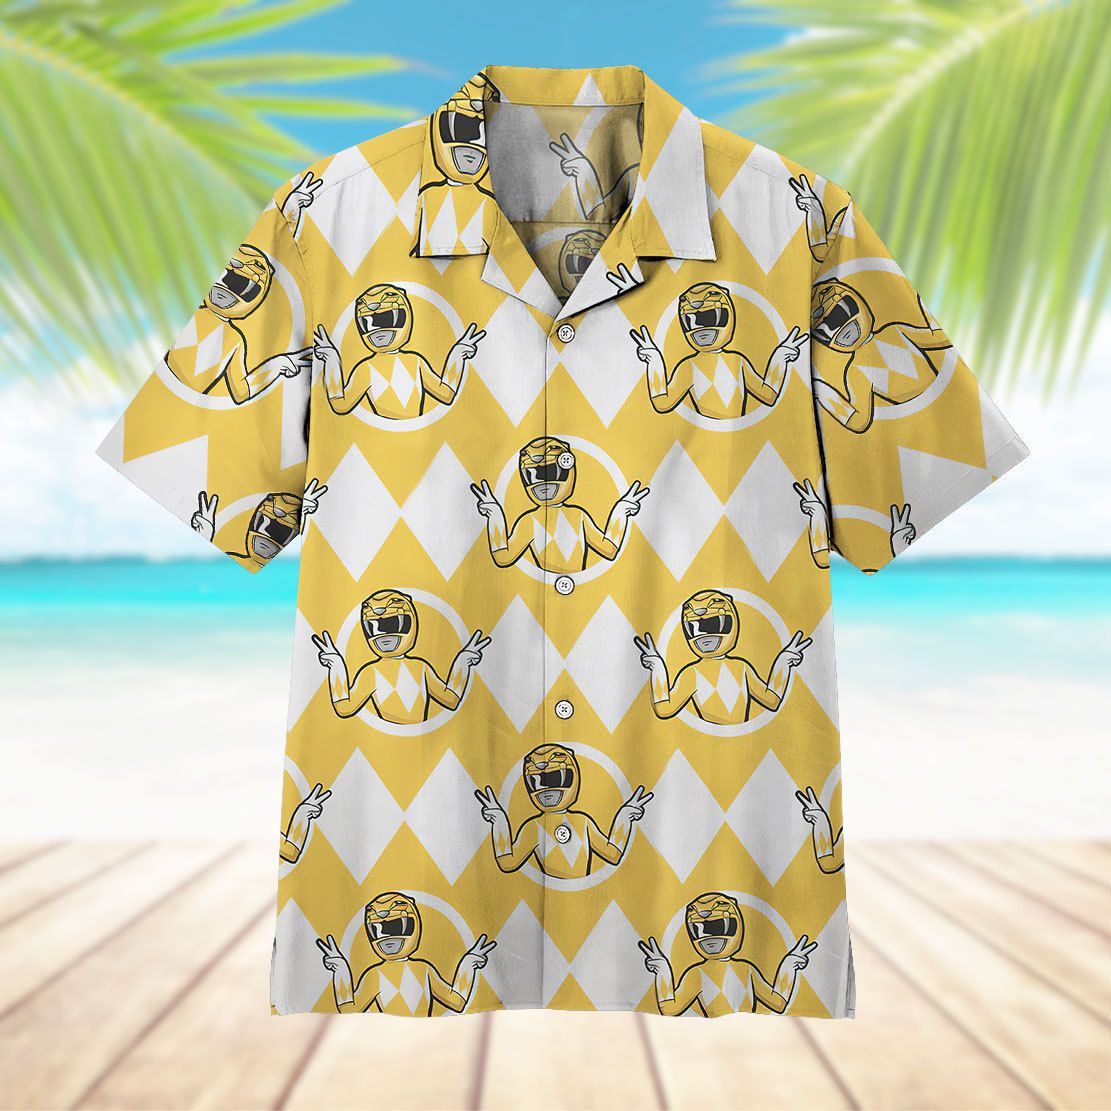 Mighty Morphin Power Rangers Yellow Ranger Hawaii Shirt 7